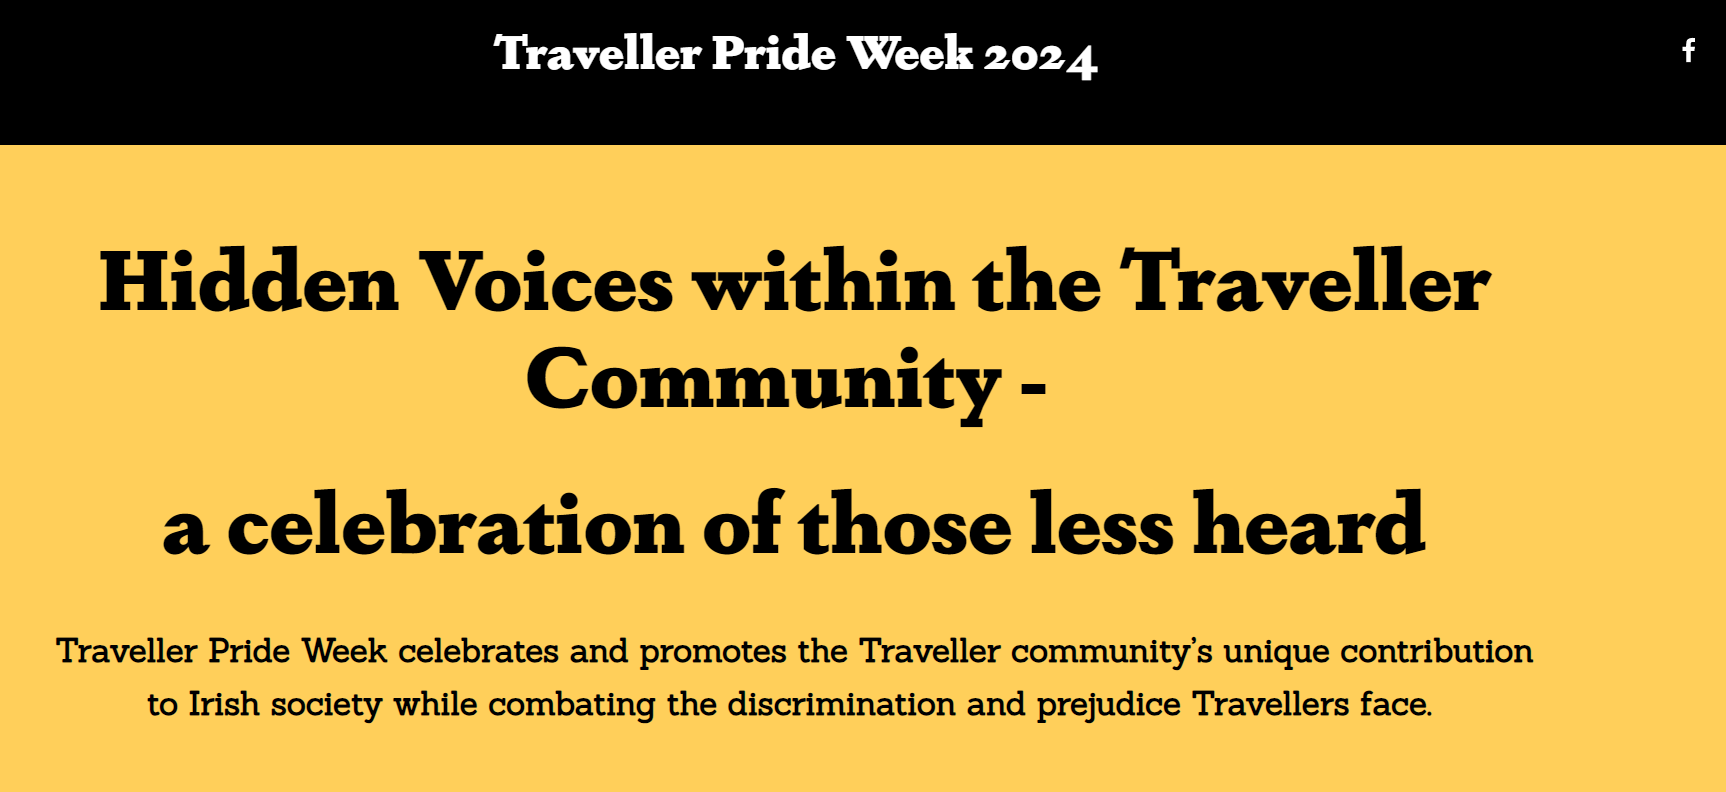 Traveller Pride Week 2024 – May 20th to May 31st